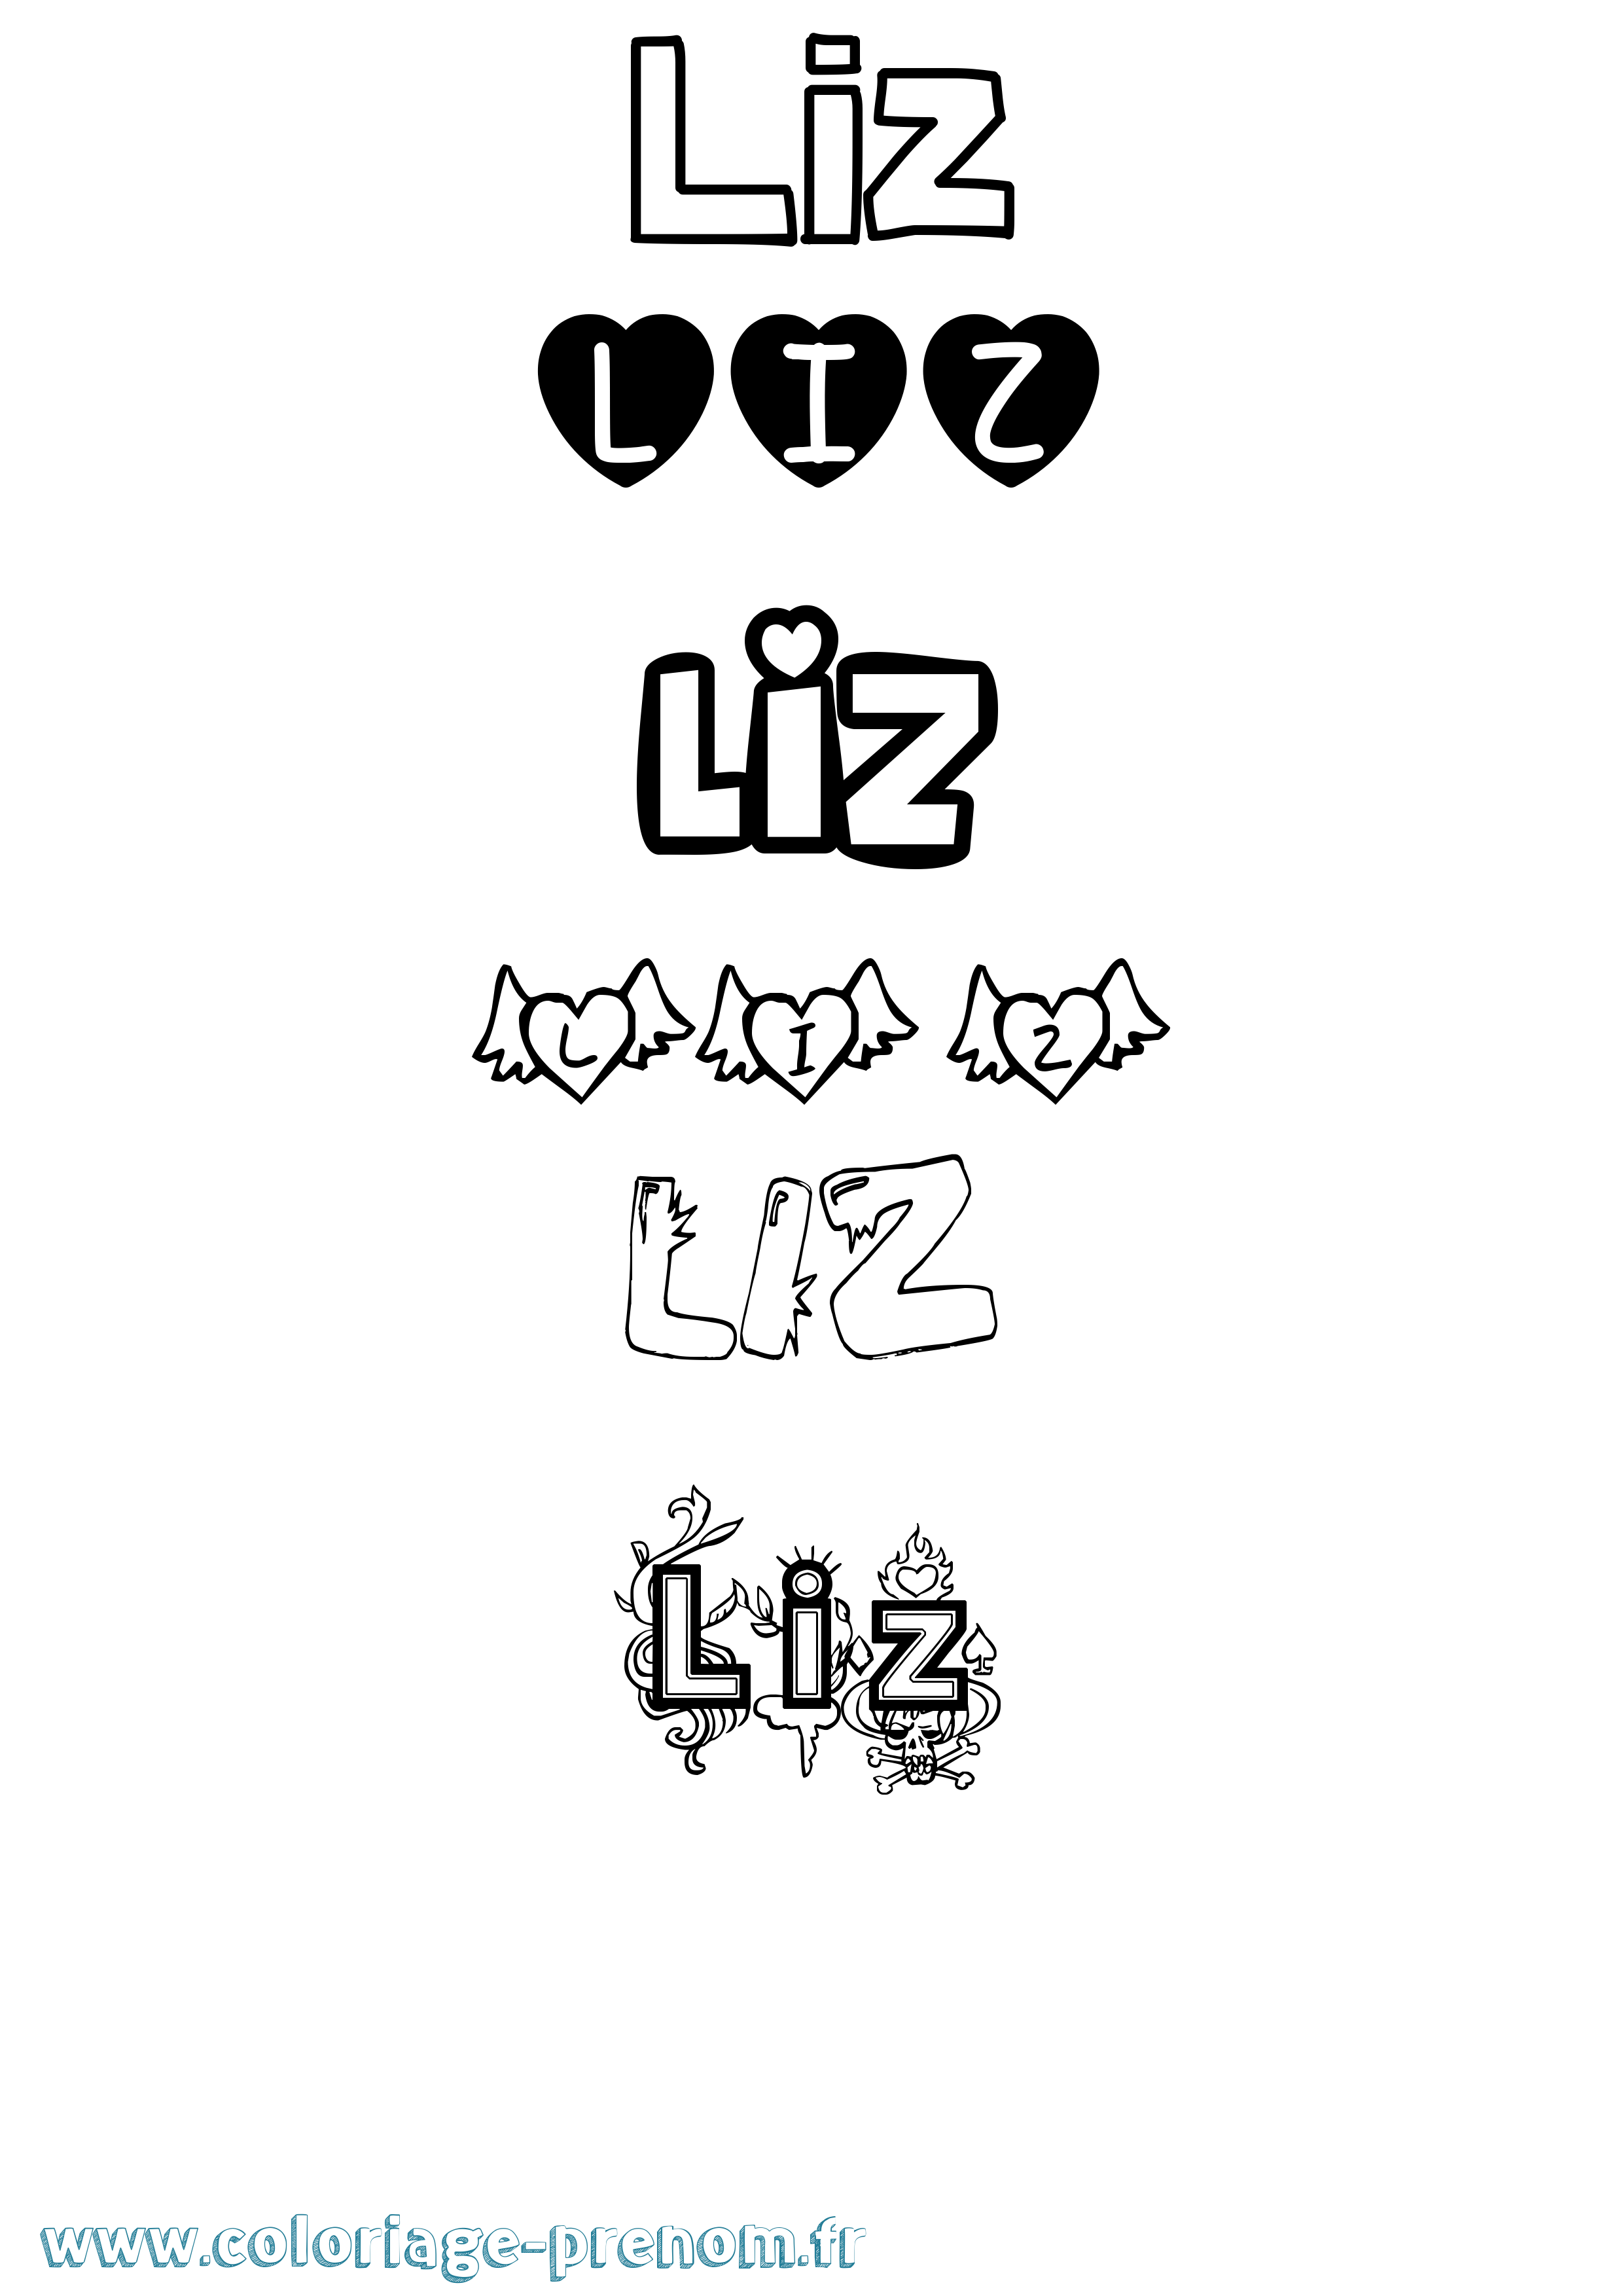 Coloriage prénom Liz Girly